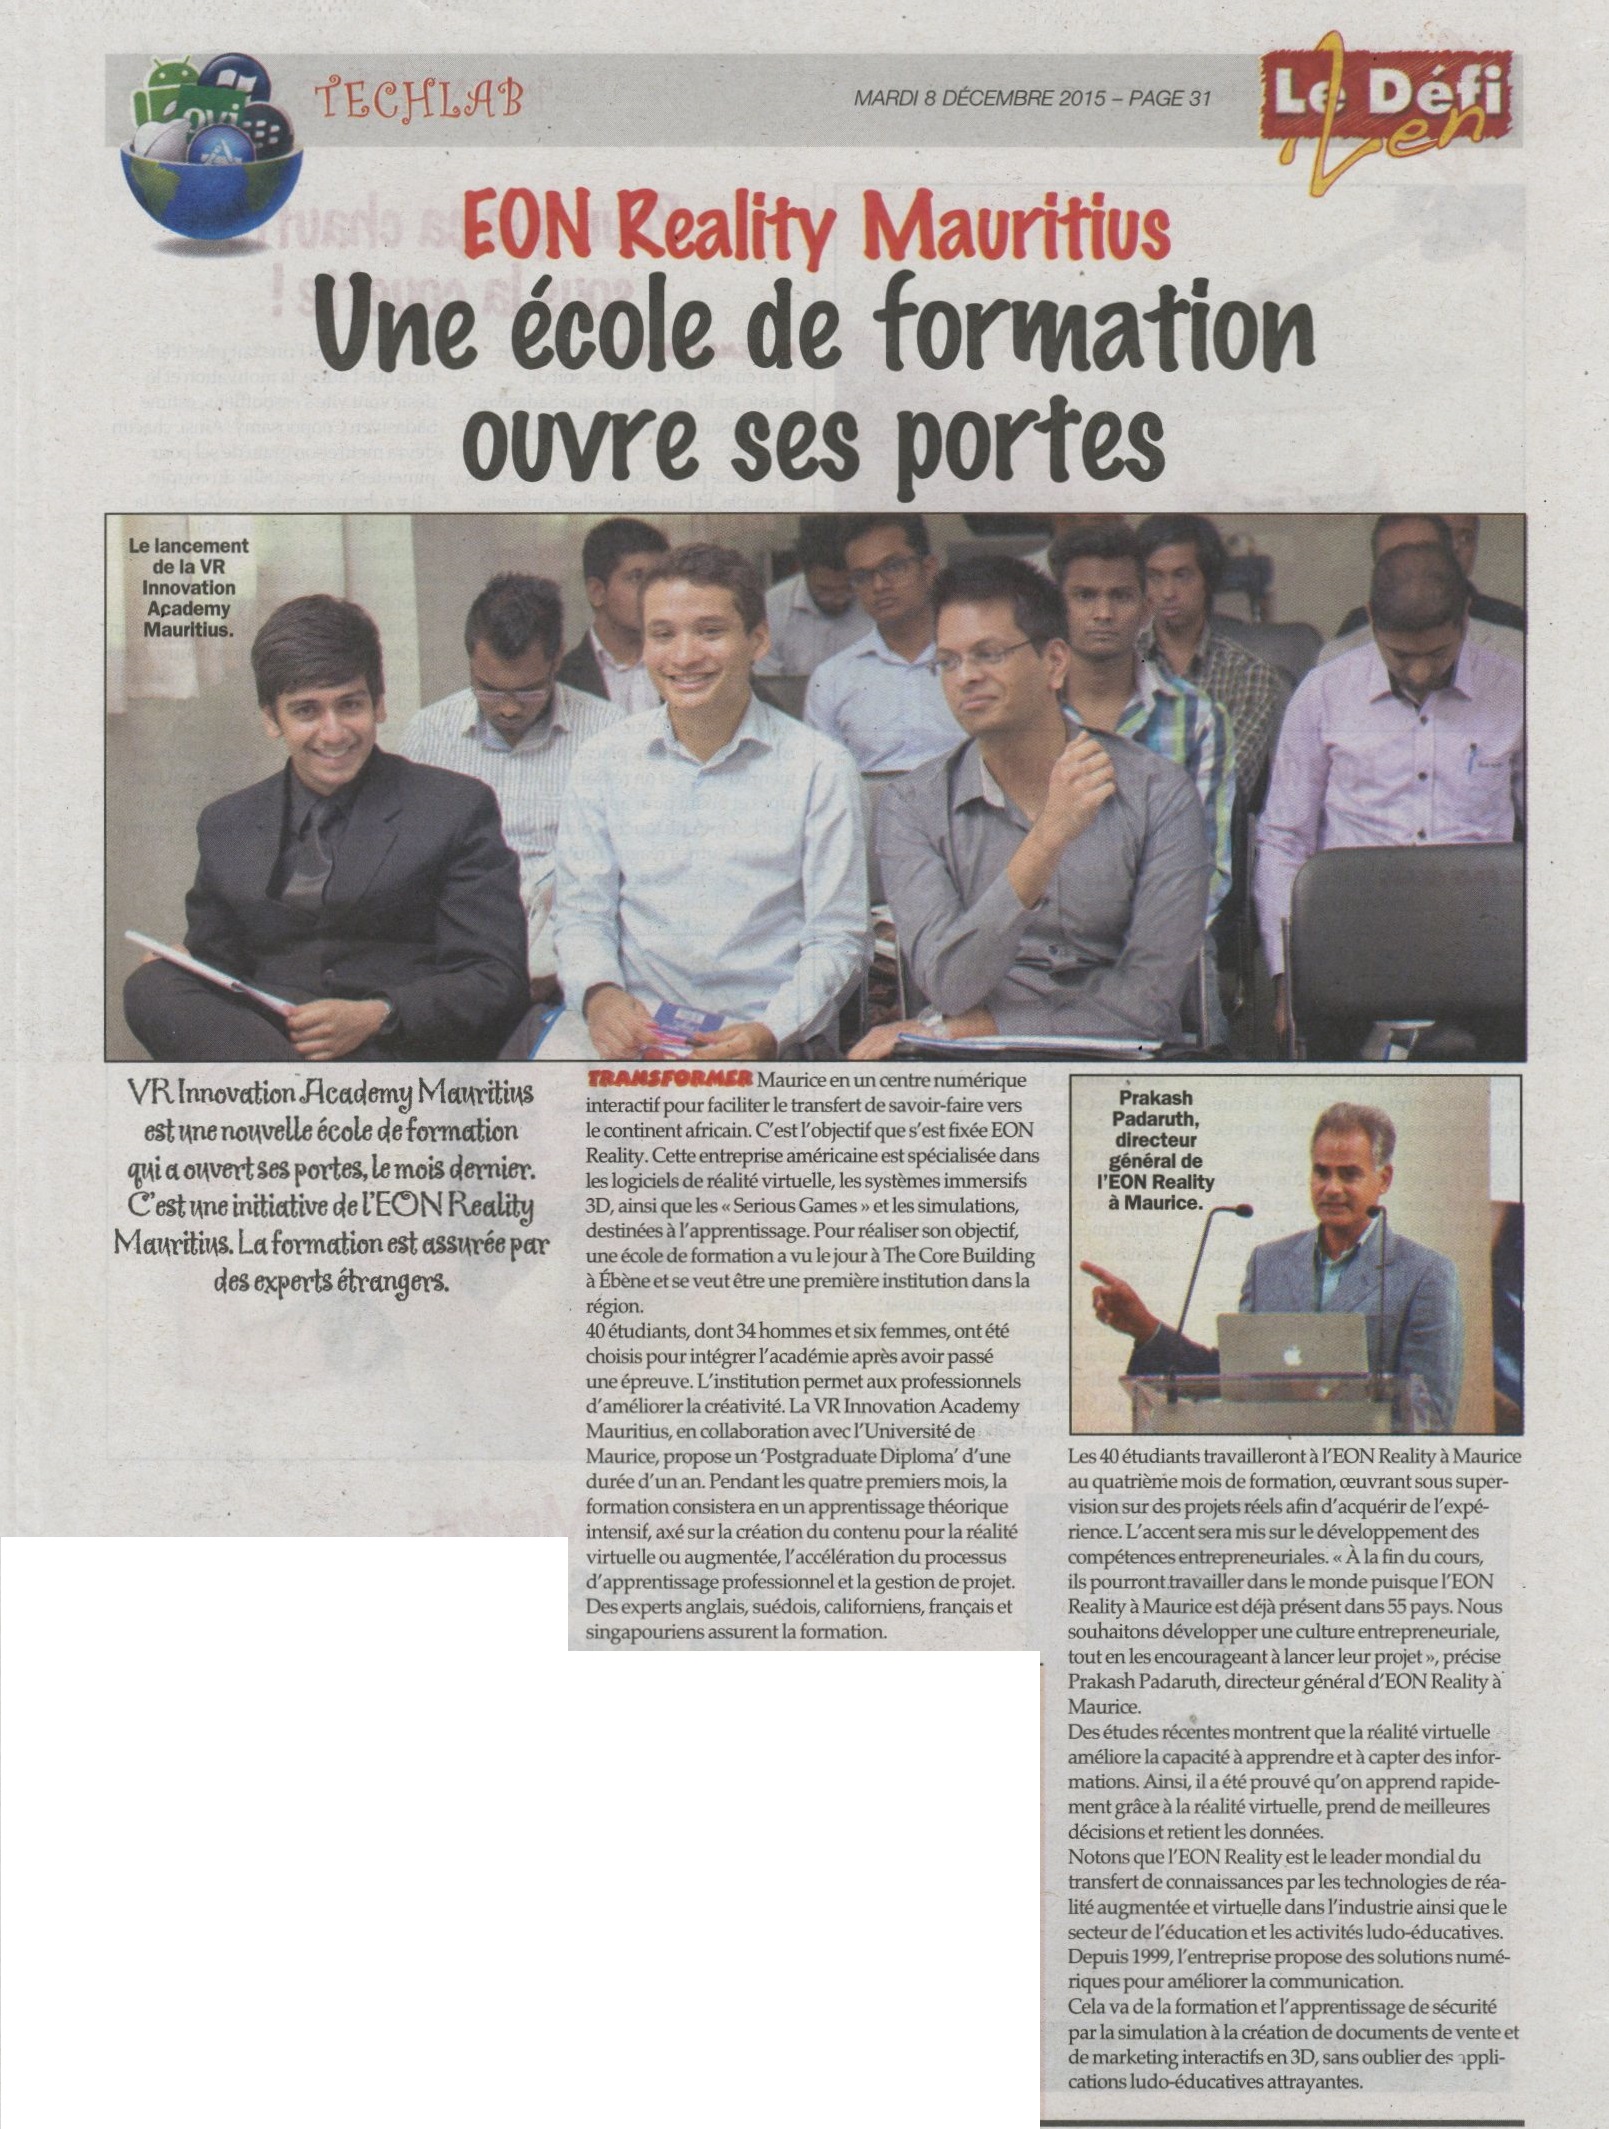 Défi Quotidien (MU) Newsroom:  A transformation school opens its doors